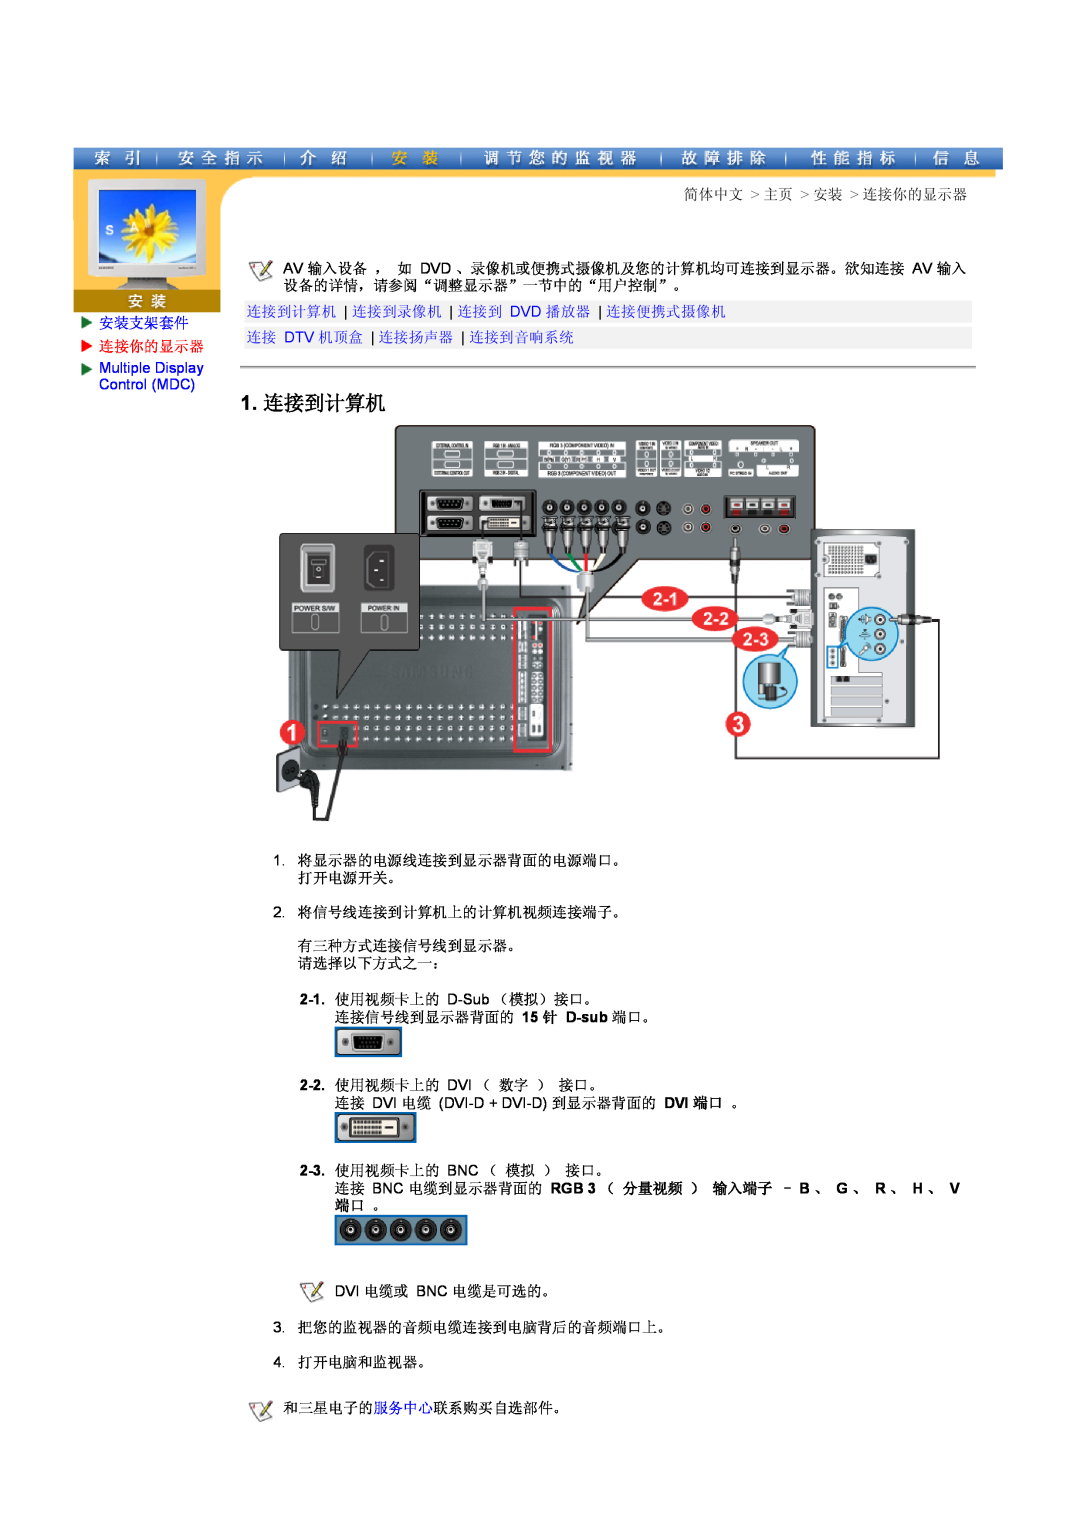 Samsung CK40PSNS/EDC, CK40PSNBG/EDC, CK40BSNS/EDC manual 1. 连接到计算机, Multiple Display Control MDC 